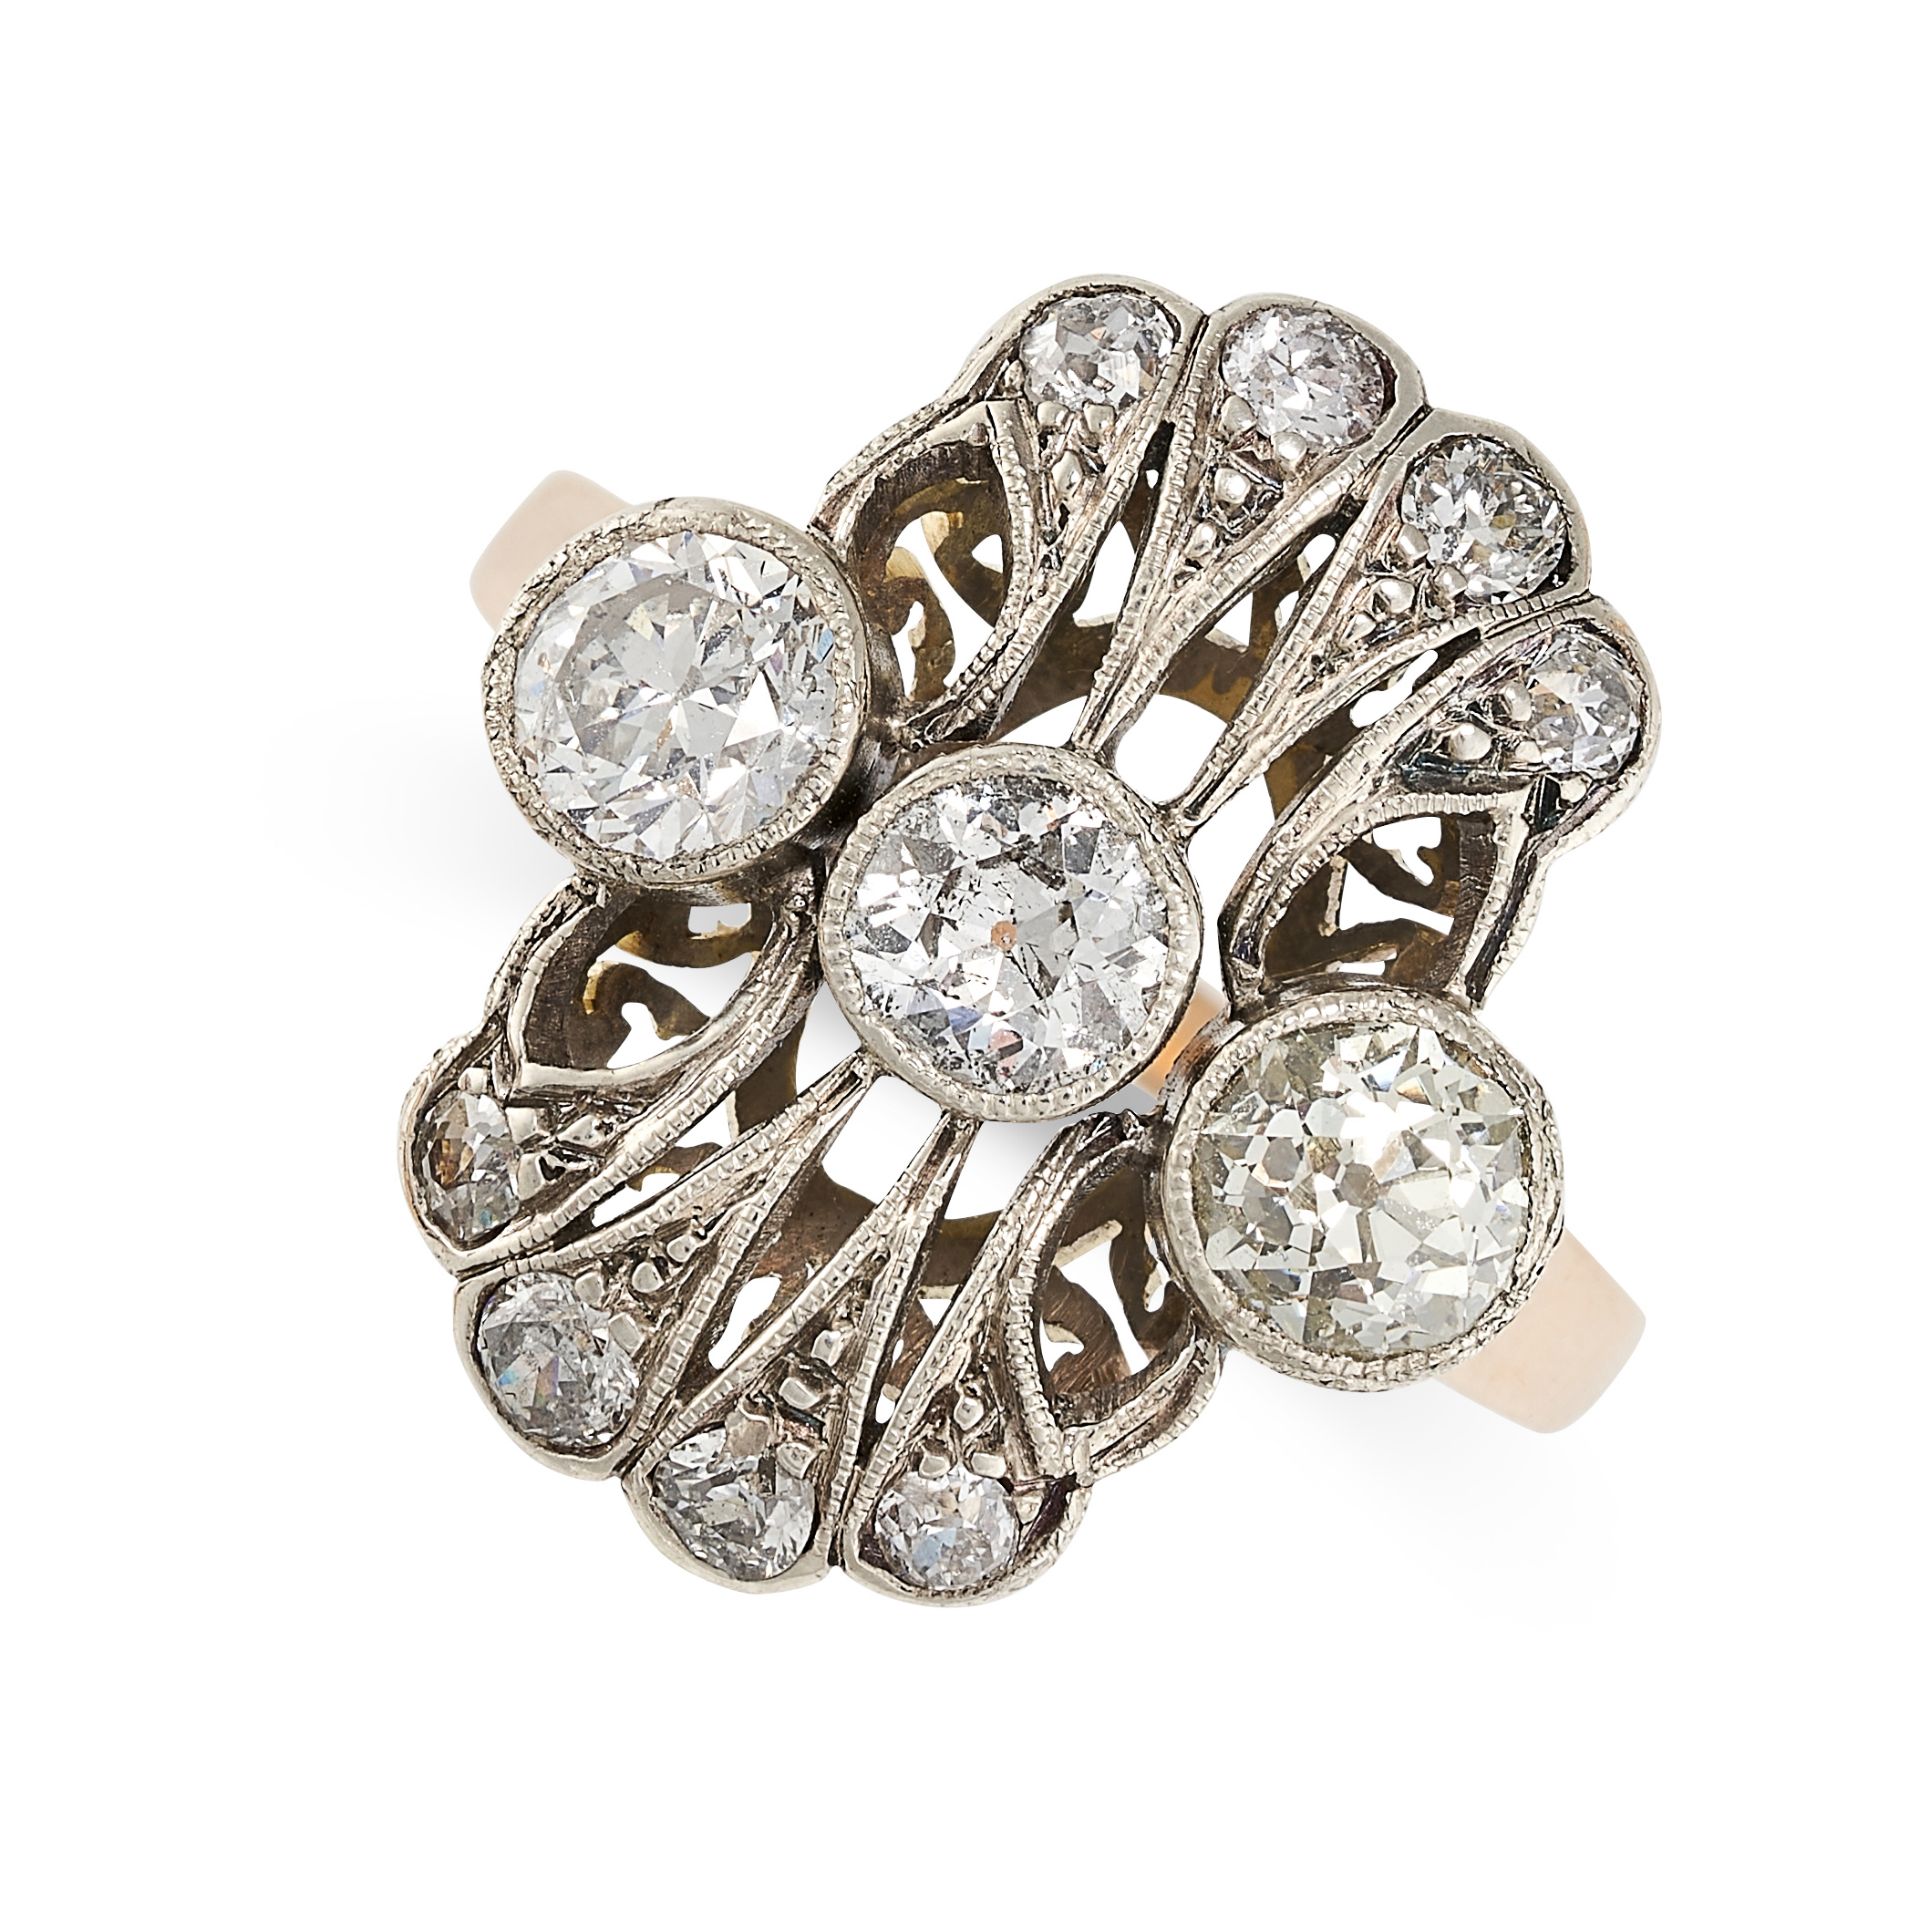 A BELLE EPOQUE DIAMOND DRESS RING  Scrolling design  Cushion shaped and circular-cut diamonds,